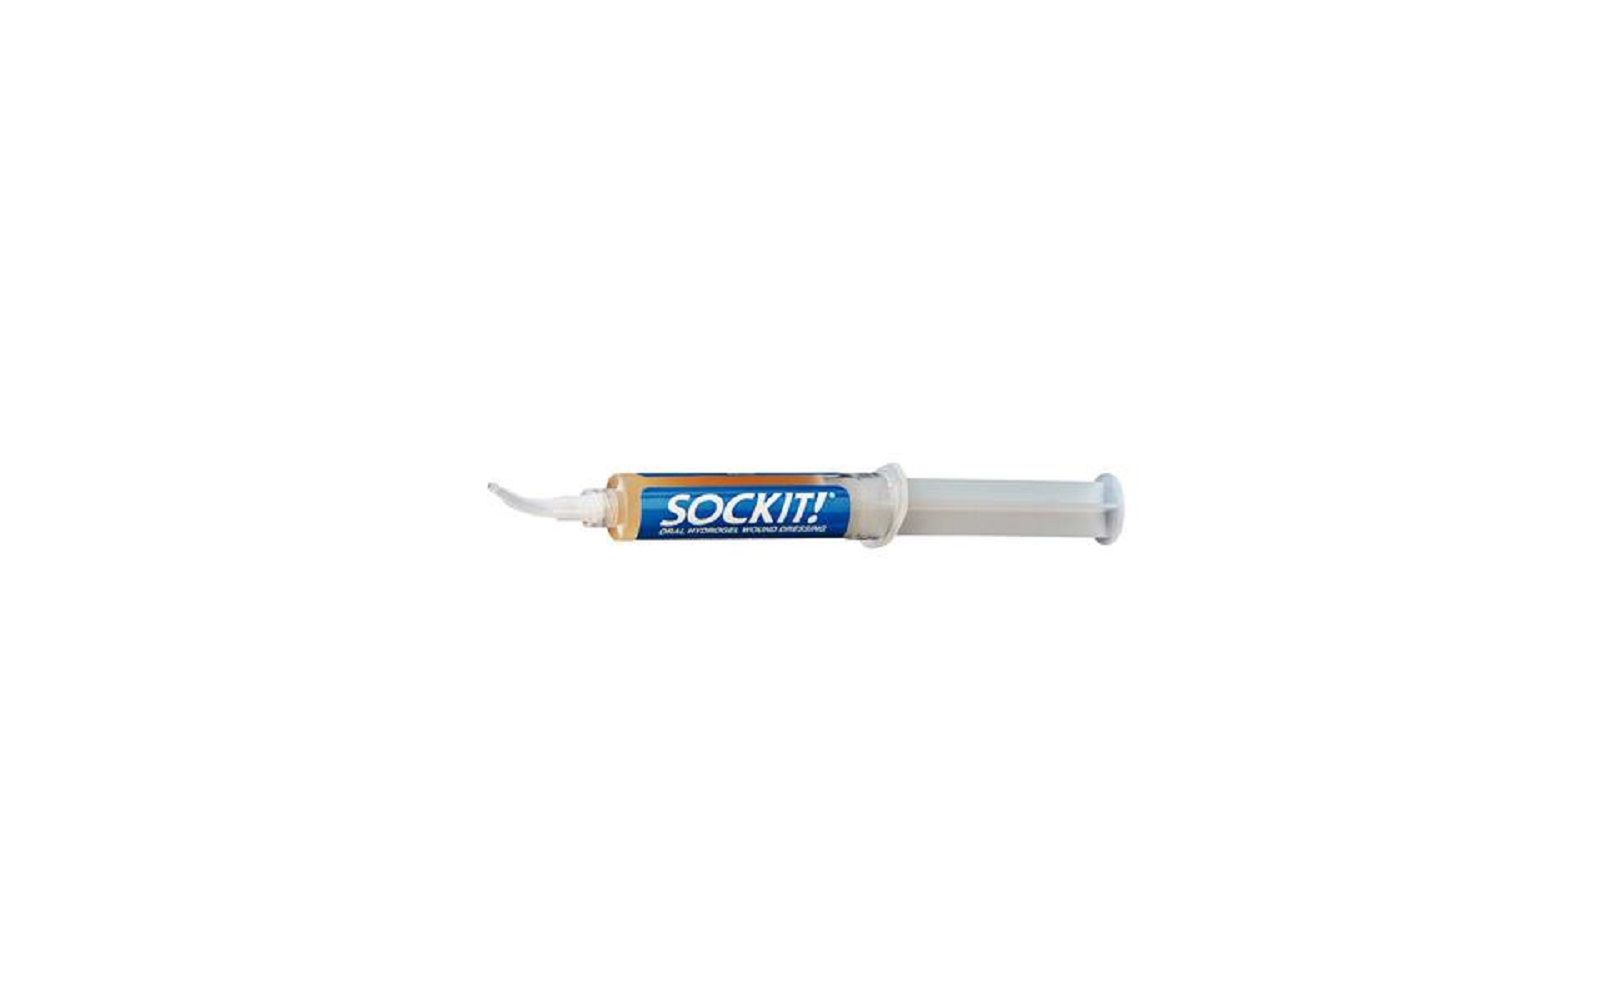 Sockit! Oral wound dressing, 10 g syringe - m. C. M. P.